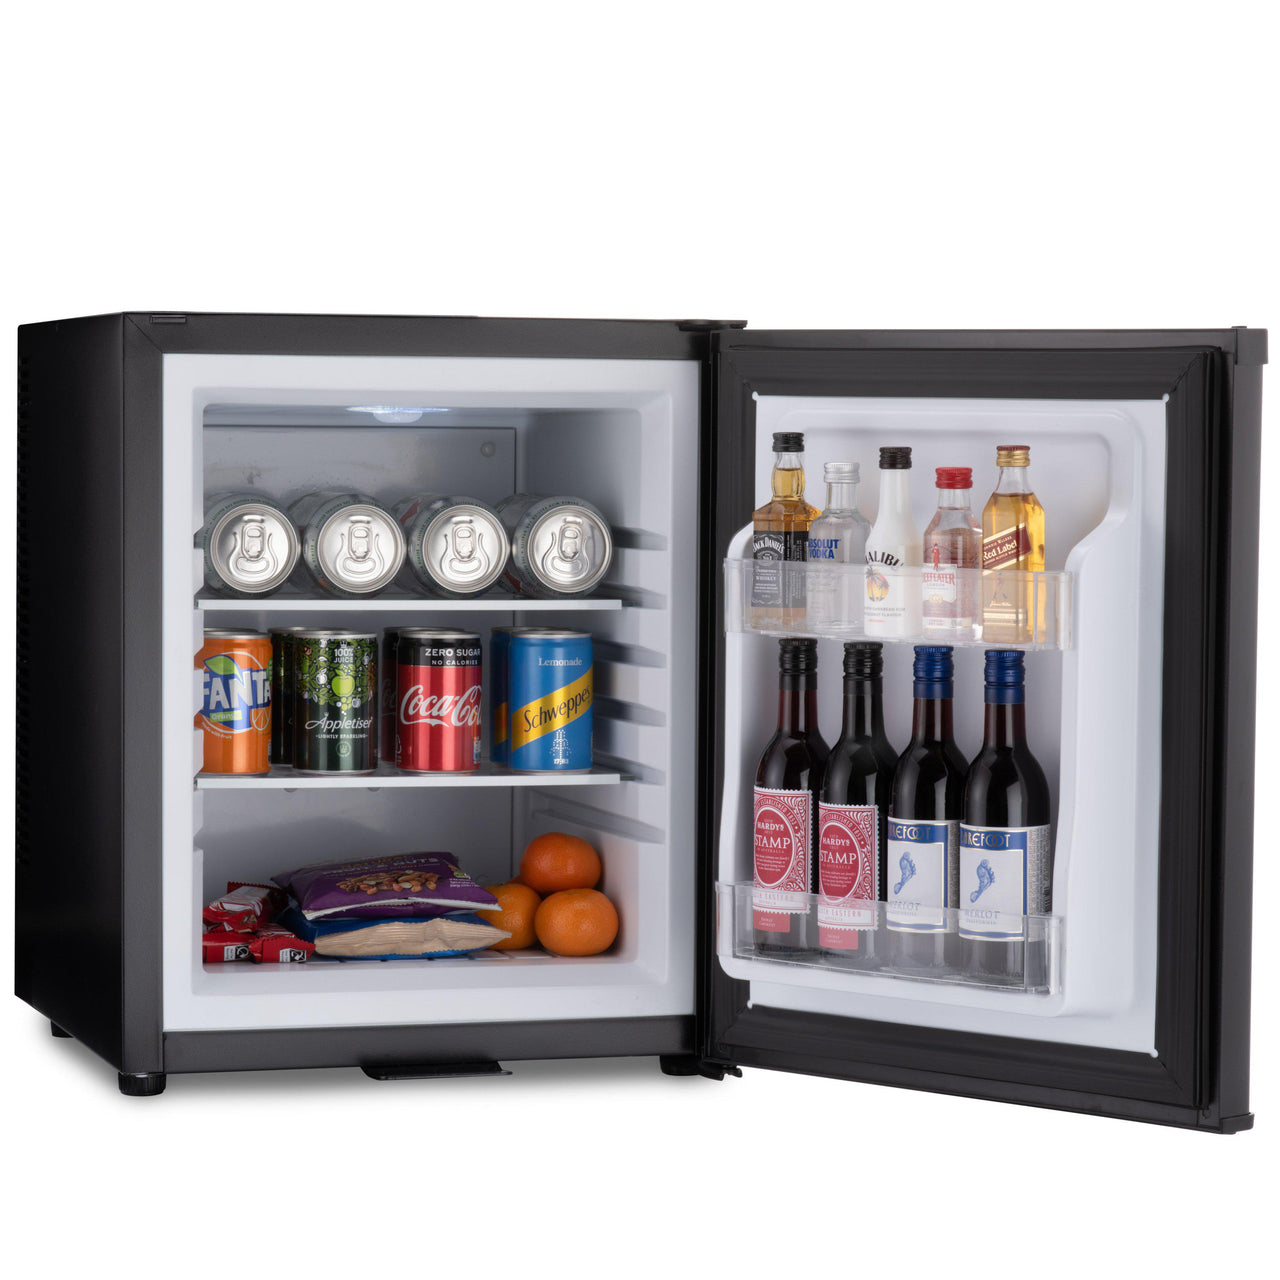 Barcool Bar 30 litre mini bar fridge black with snacks and drinks inside